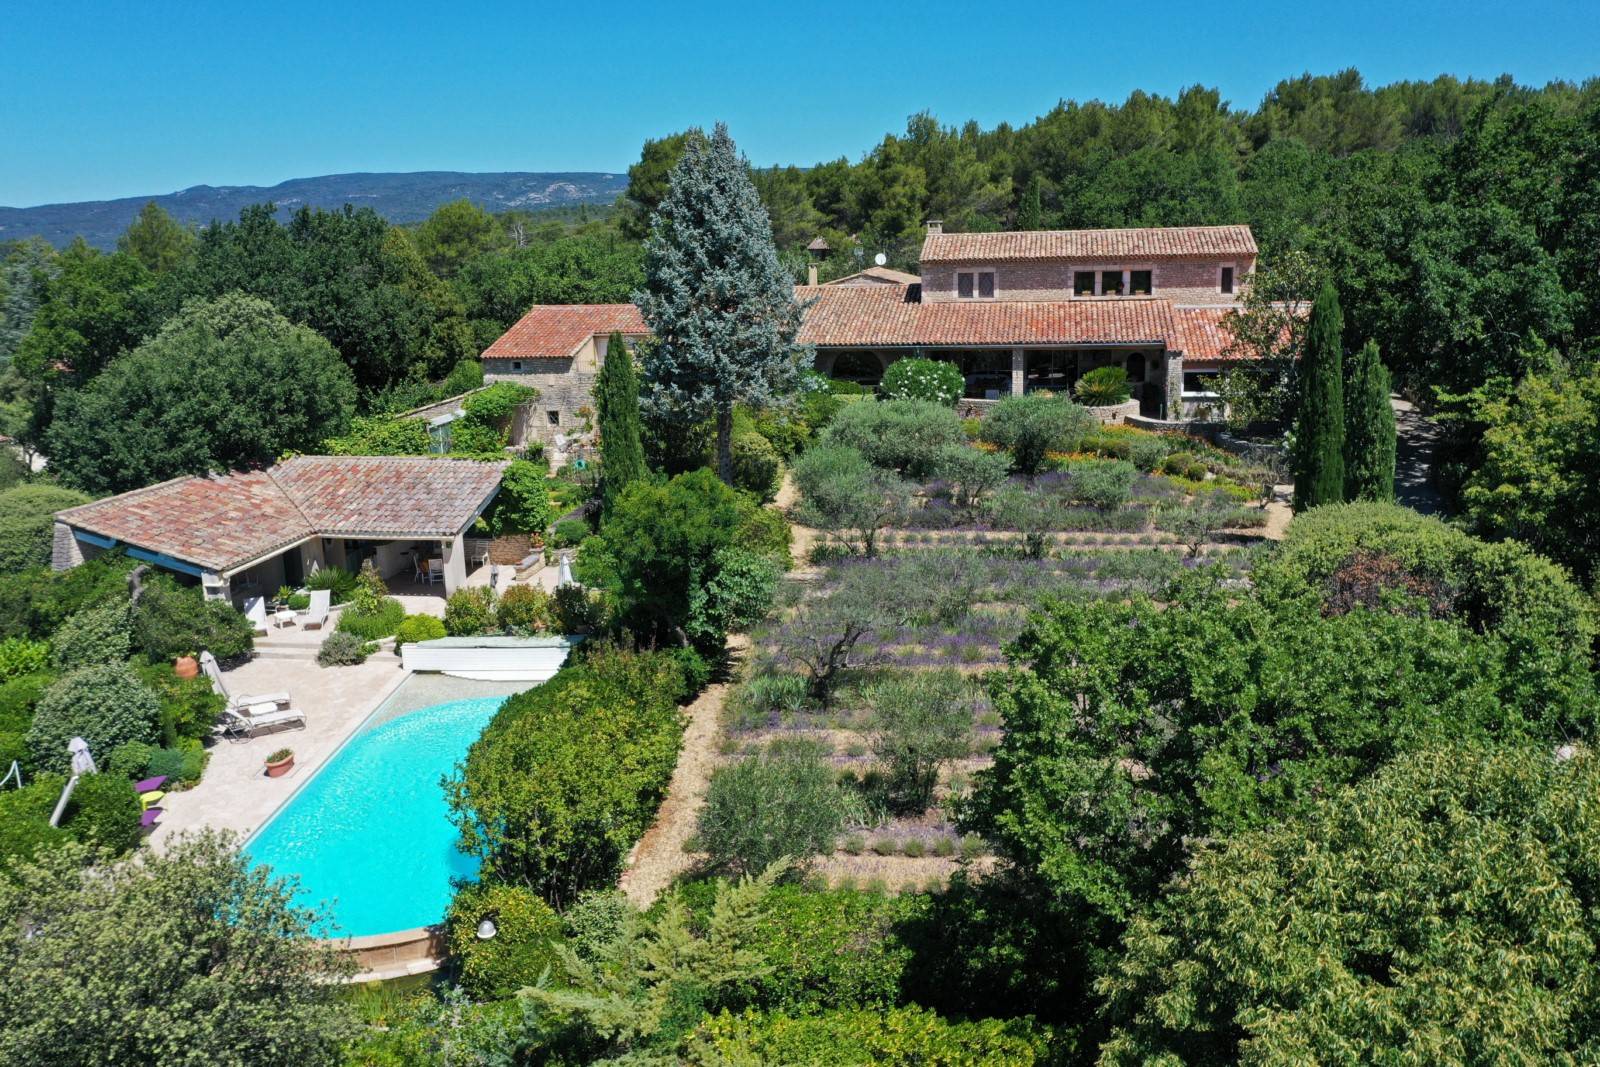 EXCLUSIVE SALE - Exceptional property on 4.3 acres facing the Provencal village of Ménerbes